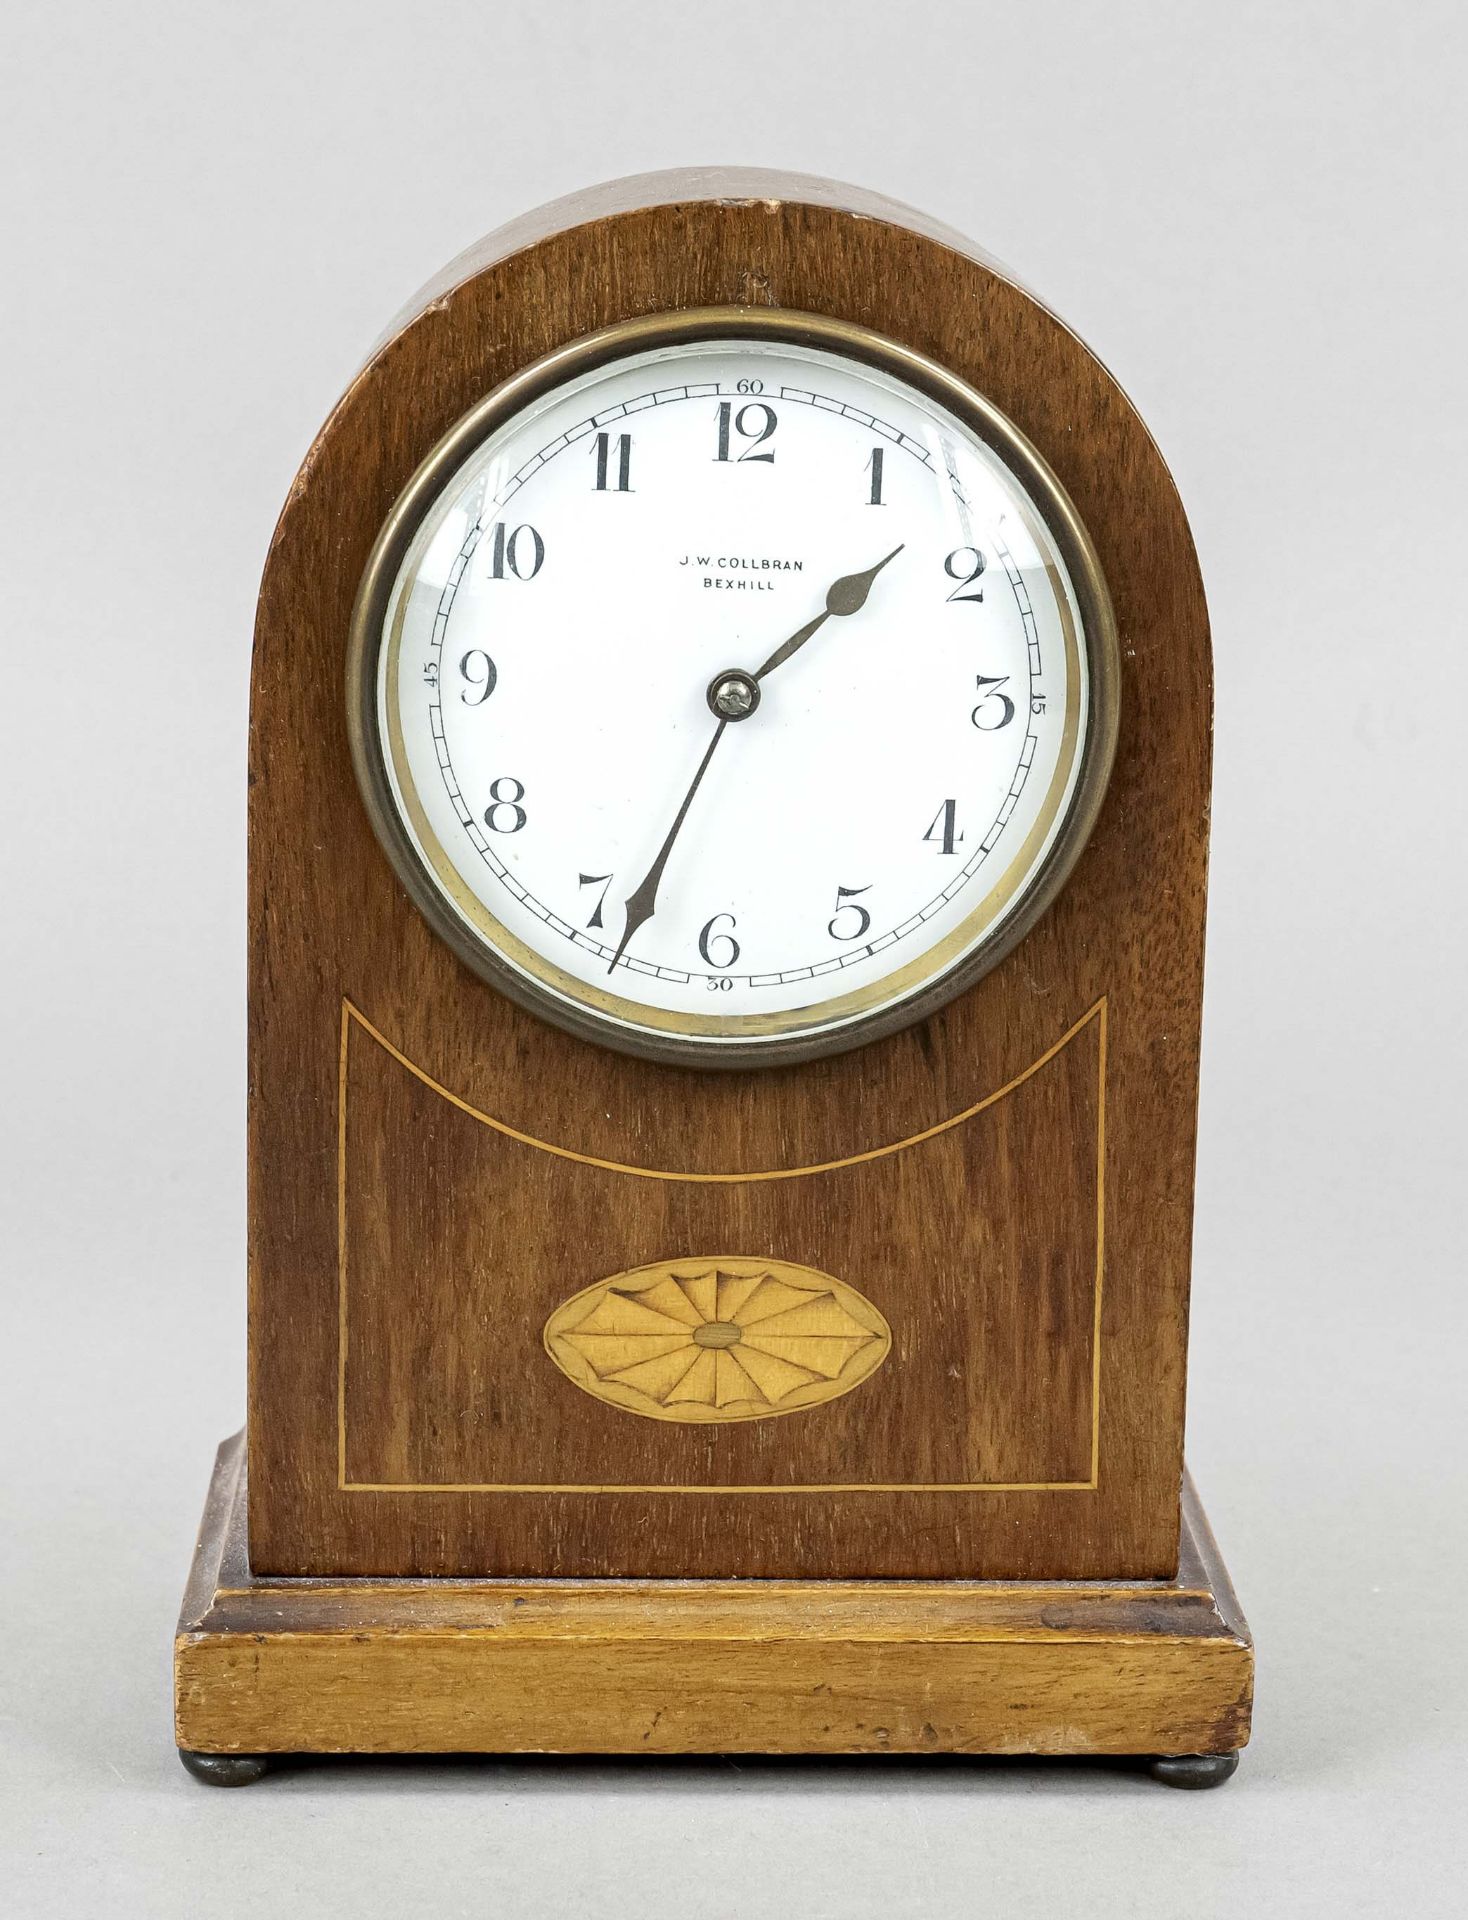 English table clock, mahogany wood, marked J.W. Collbran - Bexhill, circa 1900, round head, base